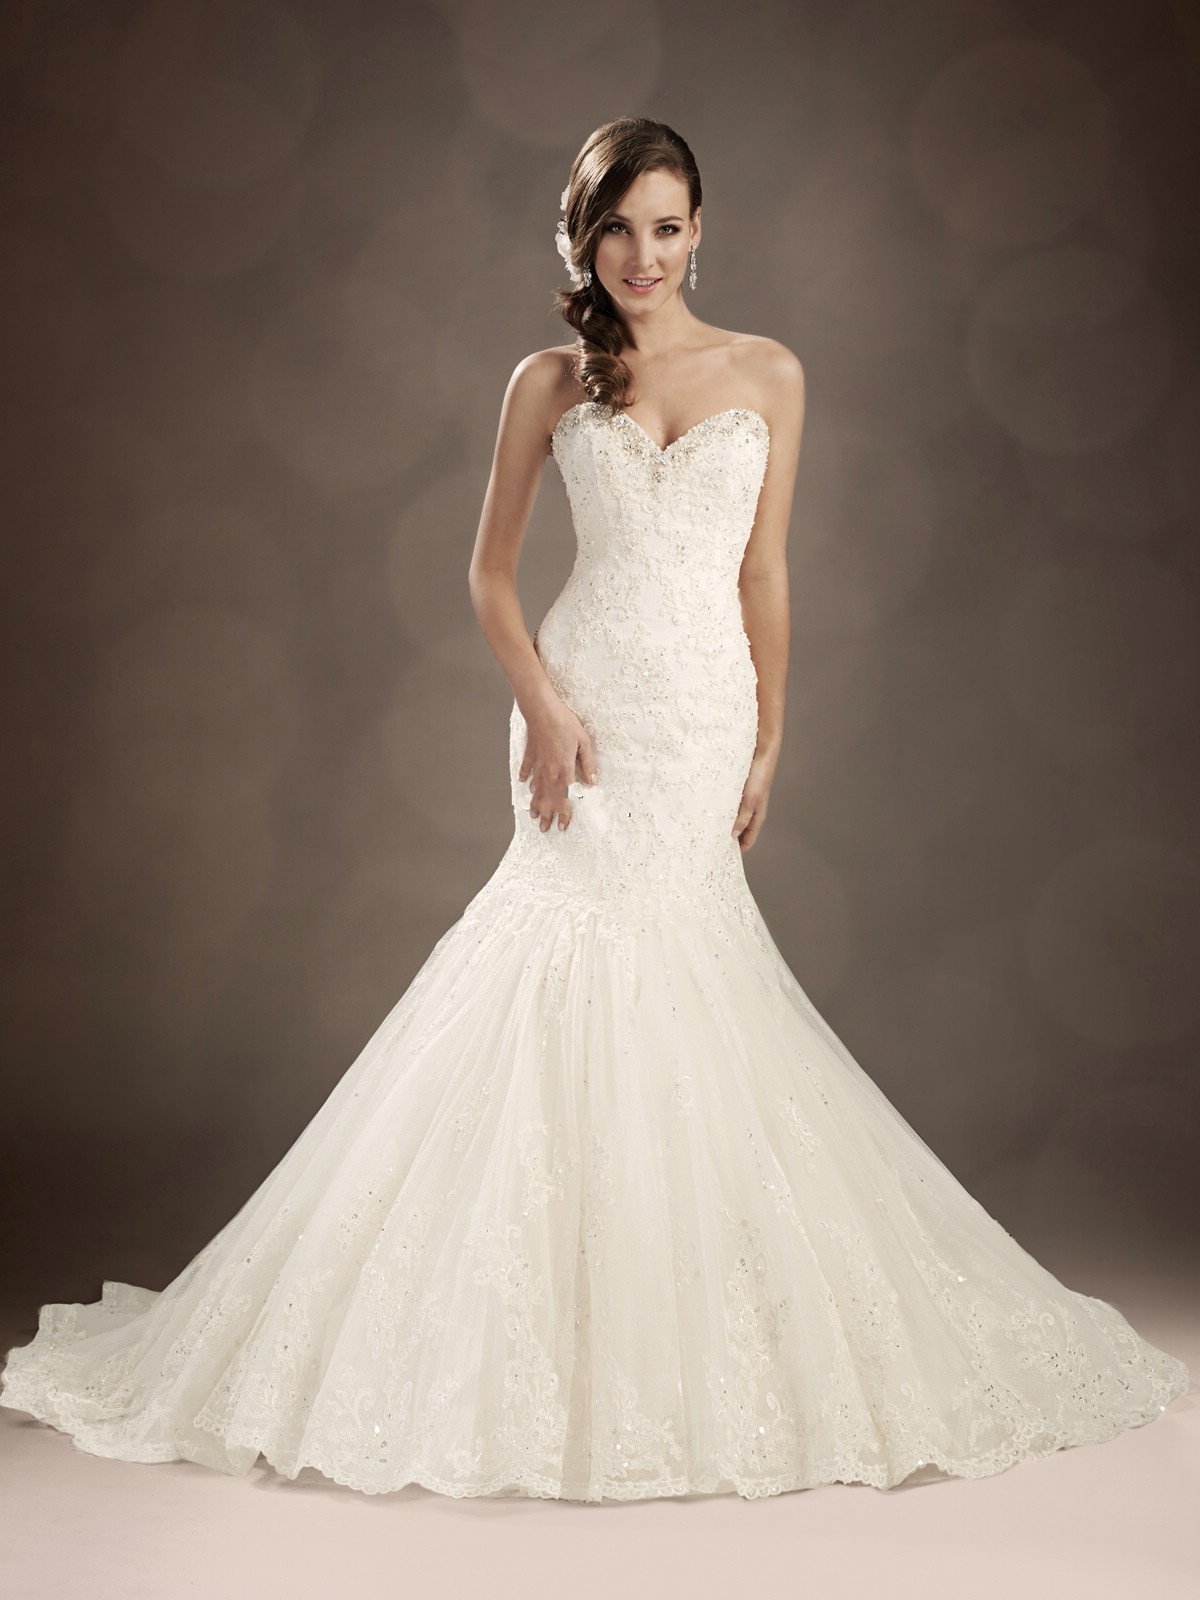 Mermaid Wedding Dresses - An Elegant Choice For Brides ...